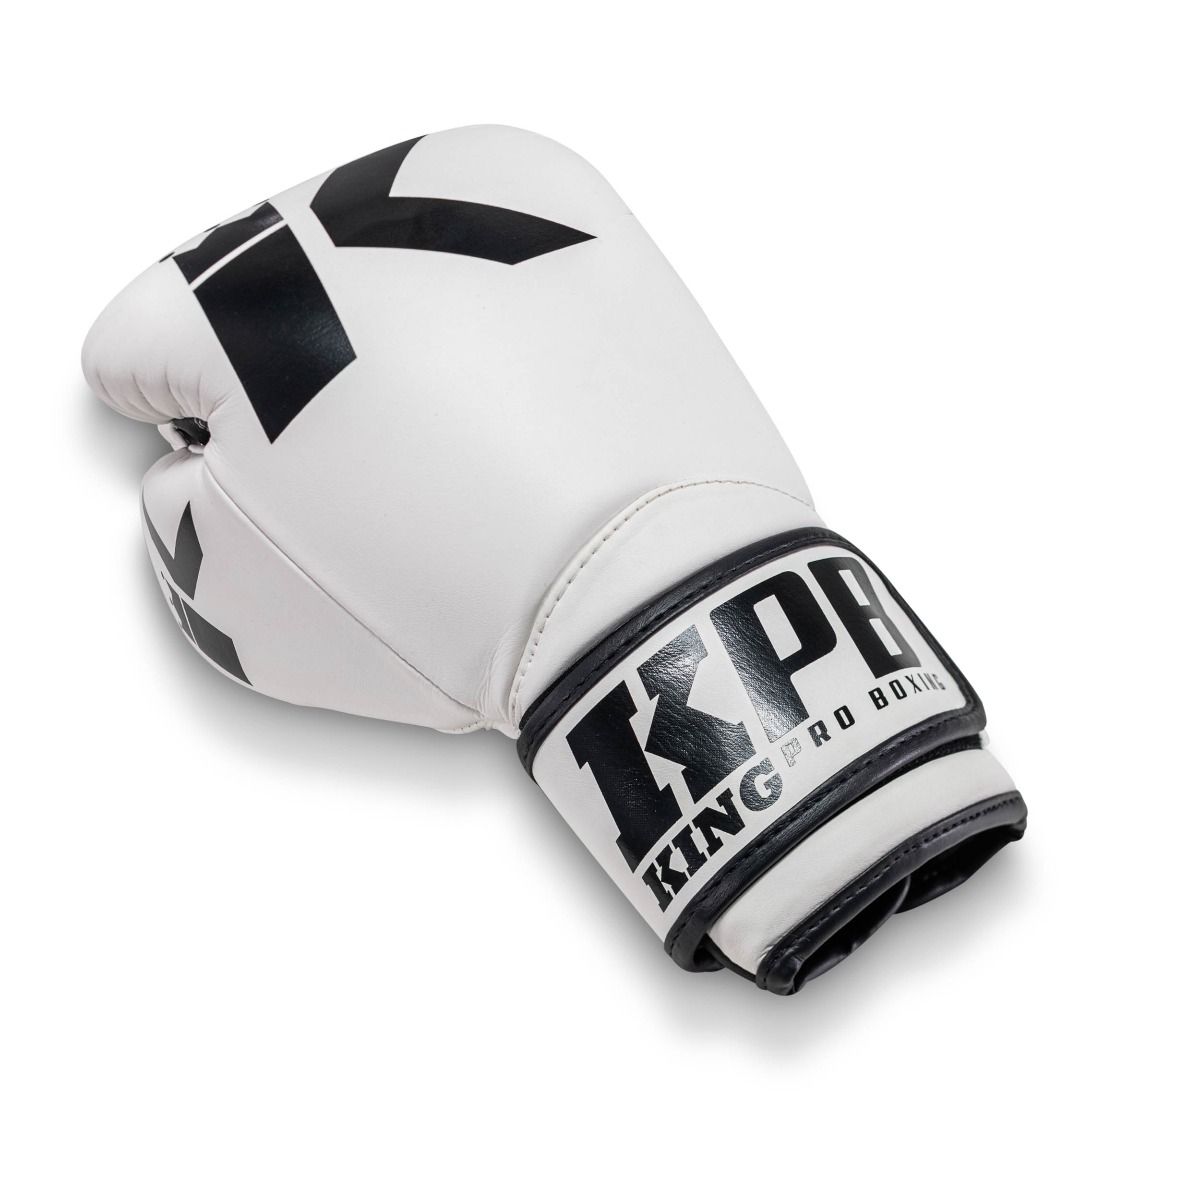 Kickbokshandschoenen King Pro Boxing VX-2 Wit